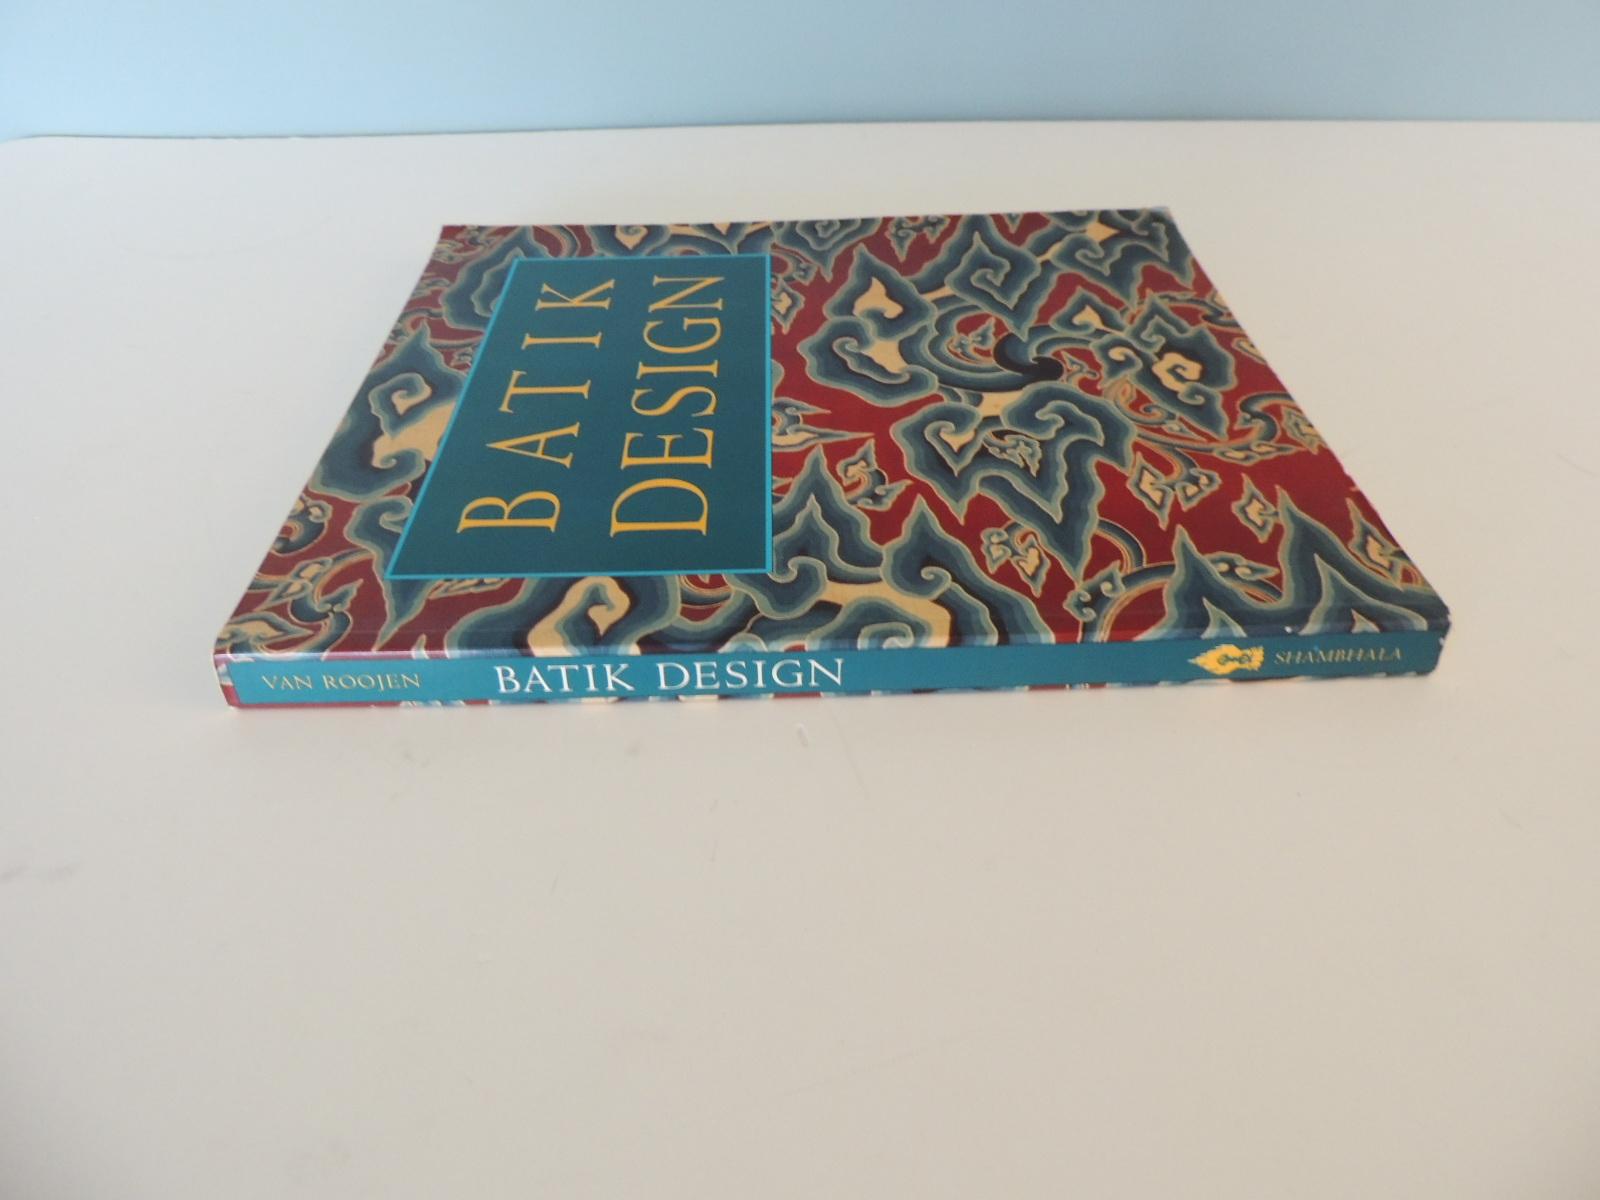 Vintage Decorating Softcover Decorating Book Batik Design
Publisher ‏ : ‎ Shambhala; 1st Shambhala ed edition (March 18, 1997)
Boston, MA
Language ‏ : ‎ English
Paperback ‏ : ‎ 192 pages
Item Weight ‏ : ‎ 2.25 pounds
Dimensions ‏ : ‎ 9.75 x 0.75 x